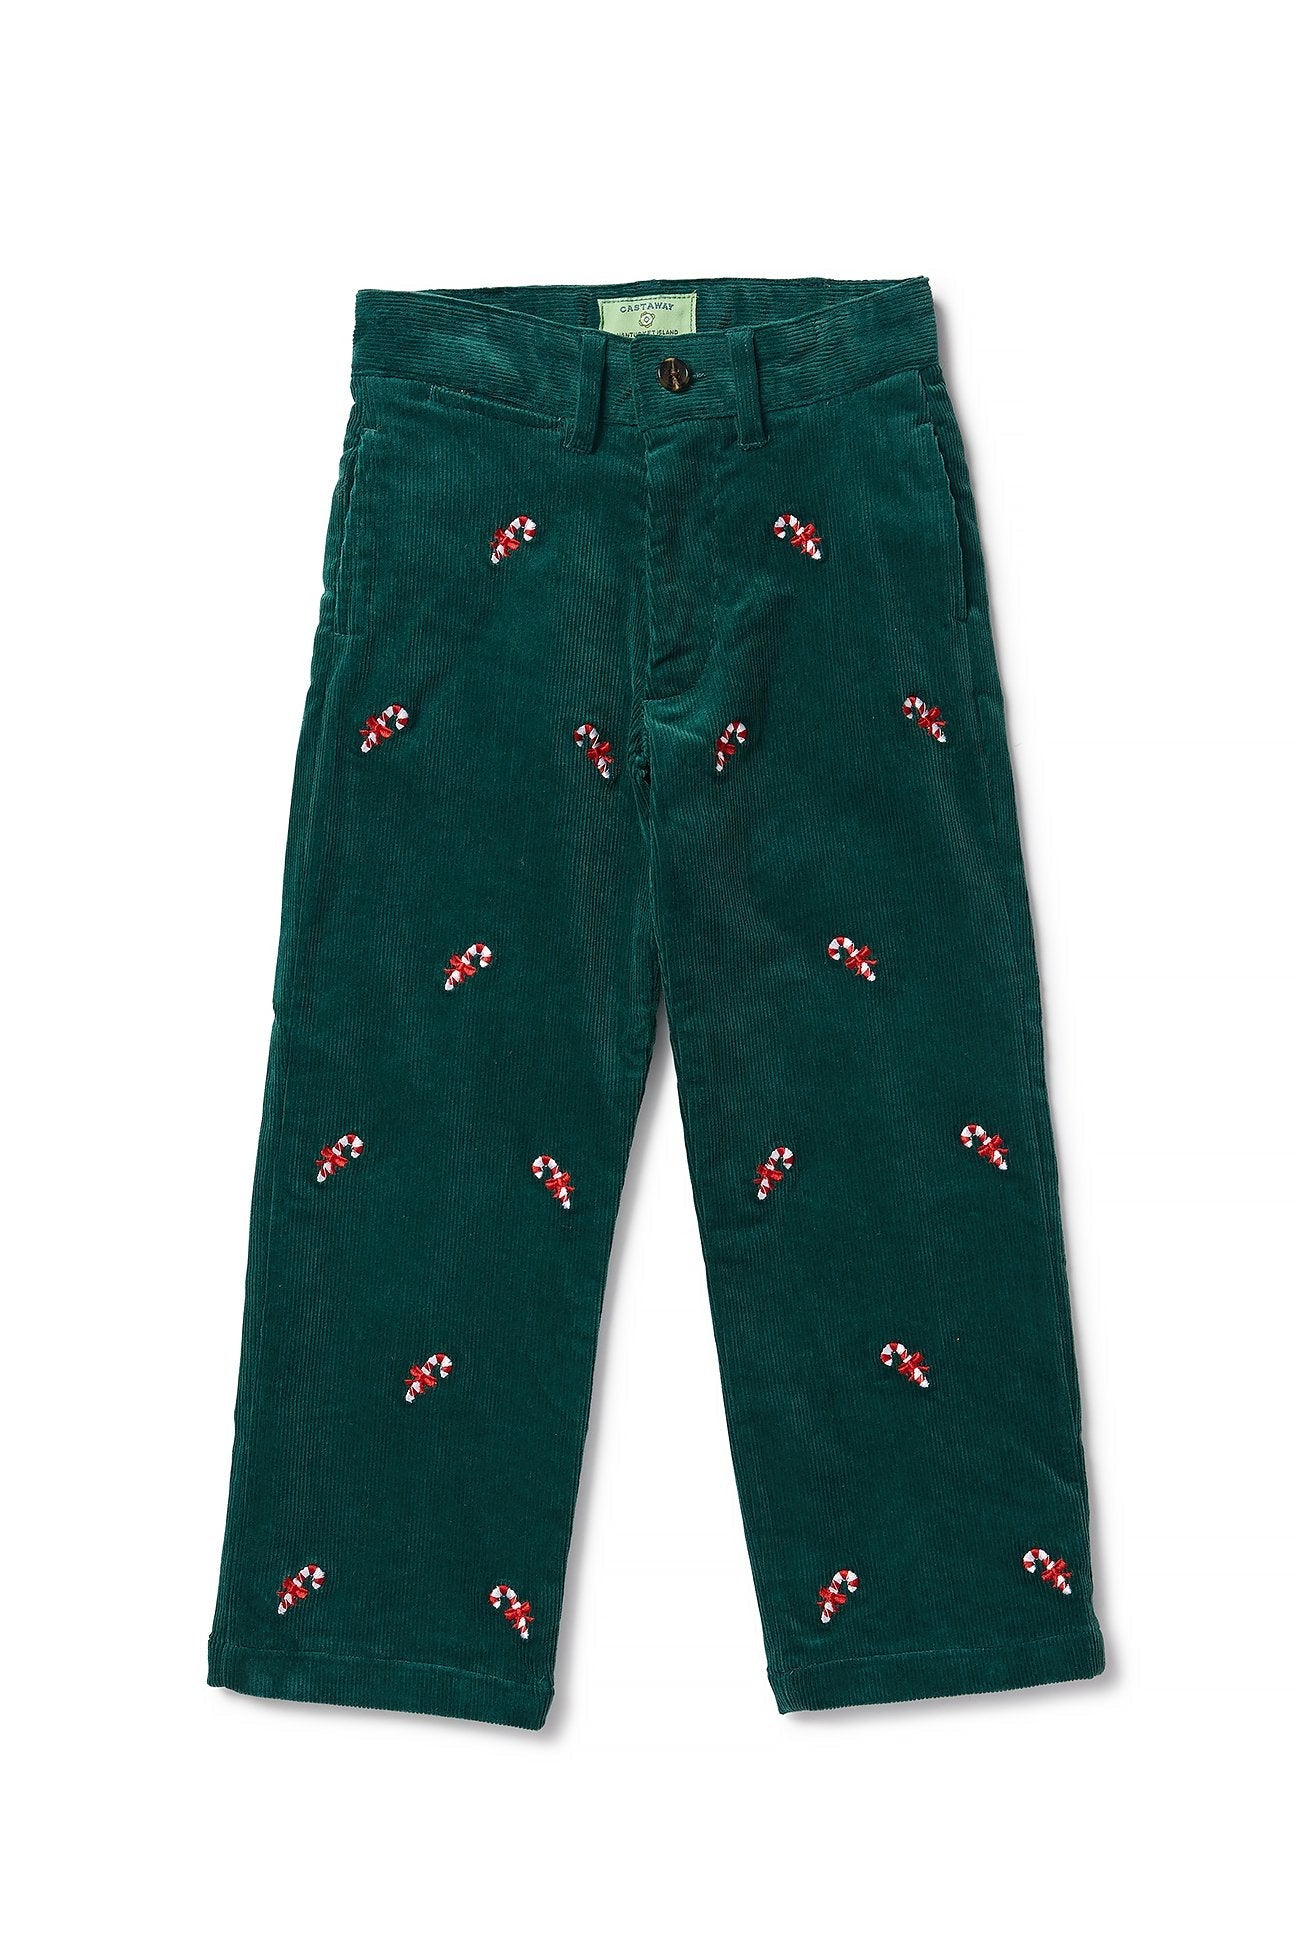 Women Corduroy Flare Pants Elastic Waist Bell Bottom Green Trousers -  Walmart.com